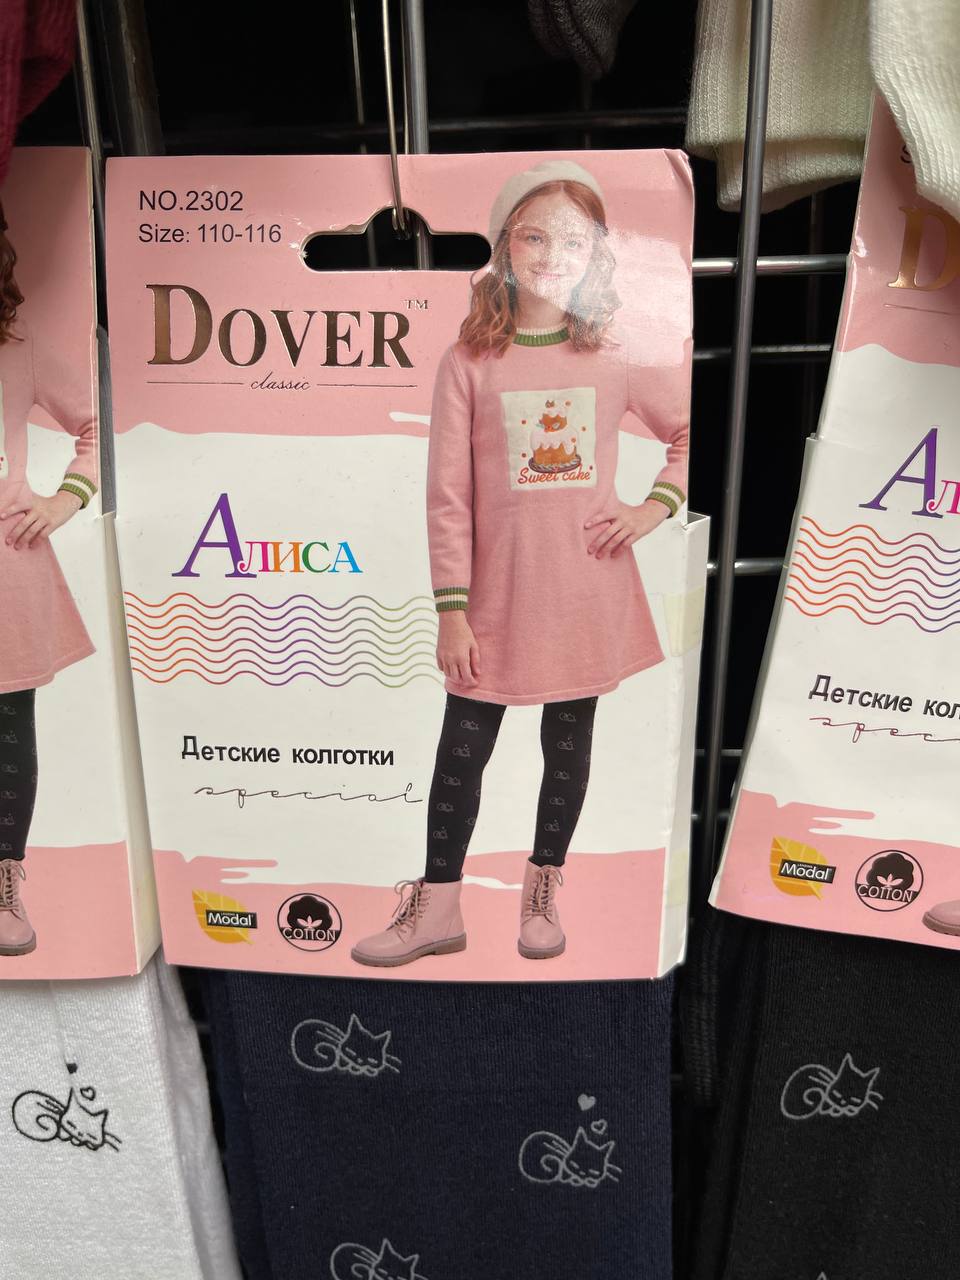 Детские колготки с принтом Dover Classic Алиса оптом - Фото №2